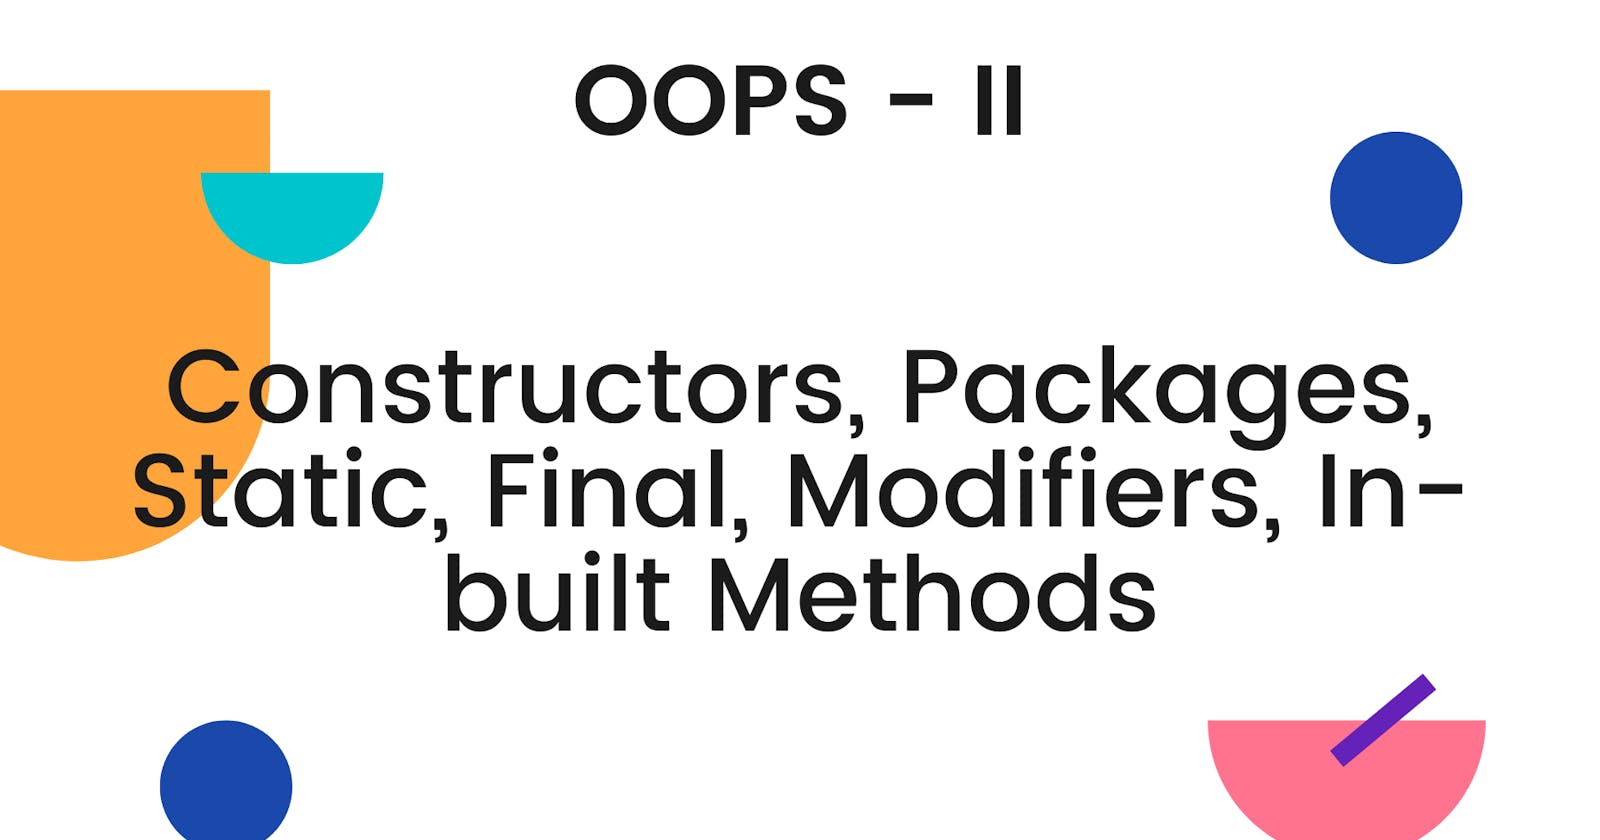 [OOP 2] Constructors, Packages, Static, Final, Modifiers, In-built Methods